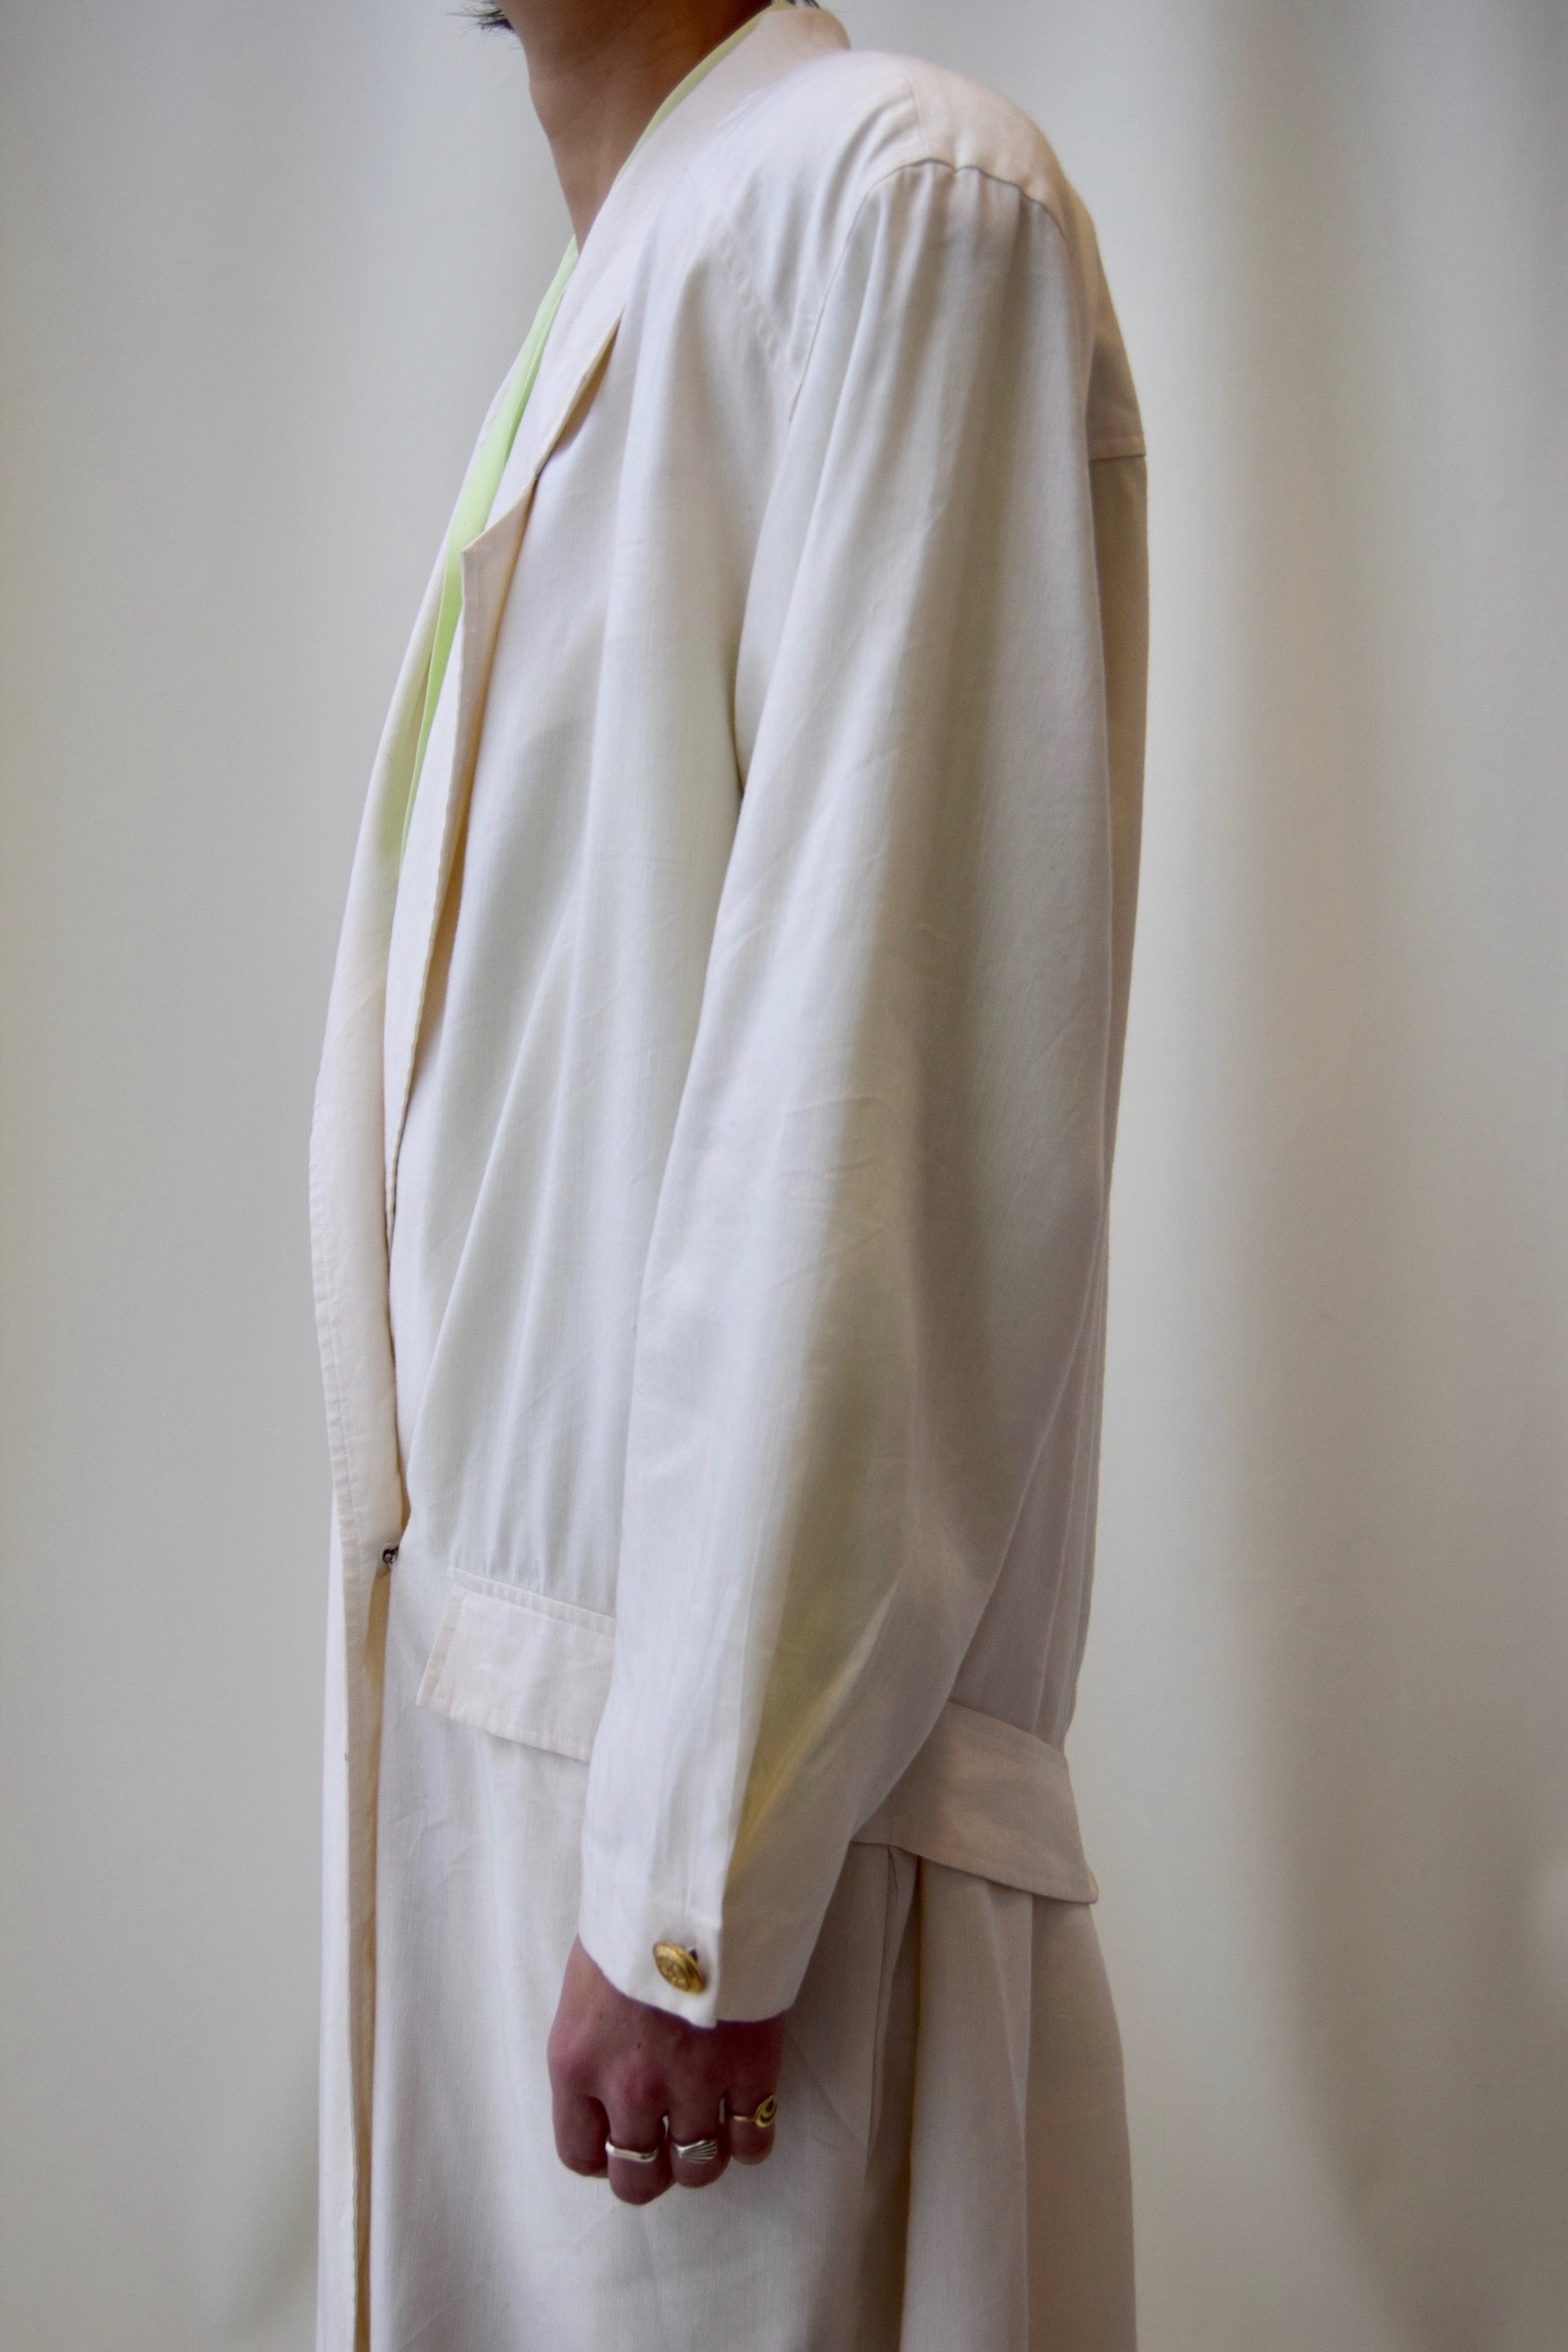 80s Tahari Linen Blend Bone White Tailored Trench Jacket